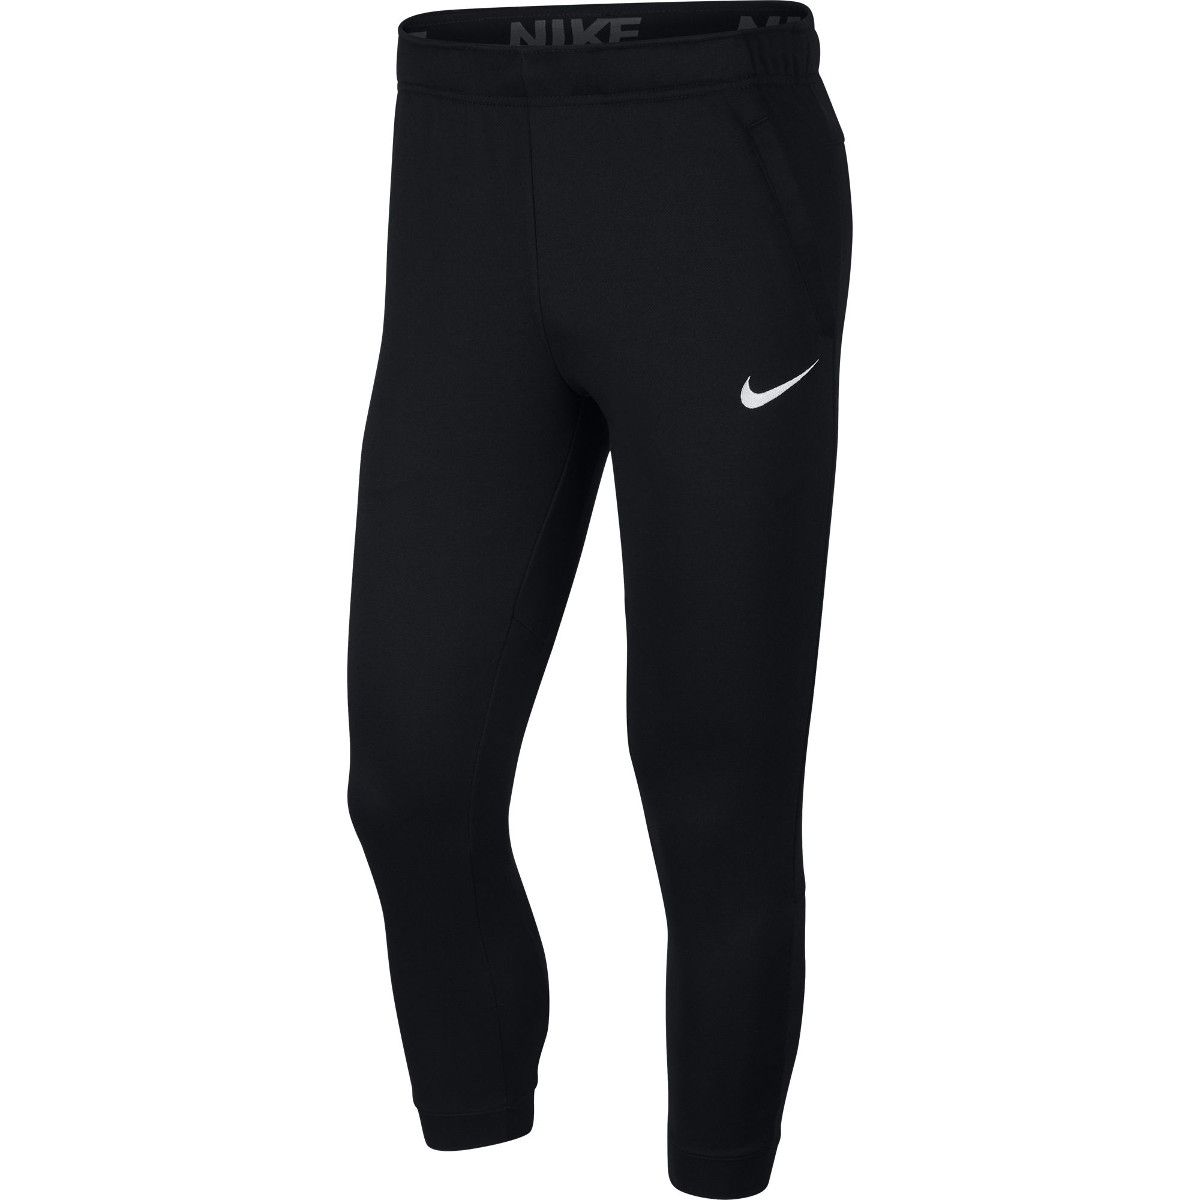 Nike Dri-FIT Men's Fleece Training Pants BV2775-010